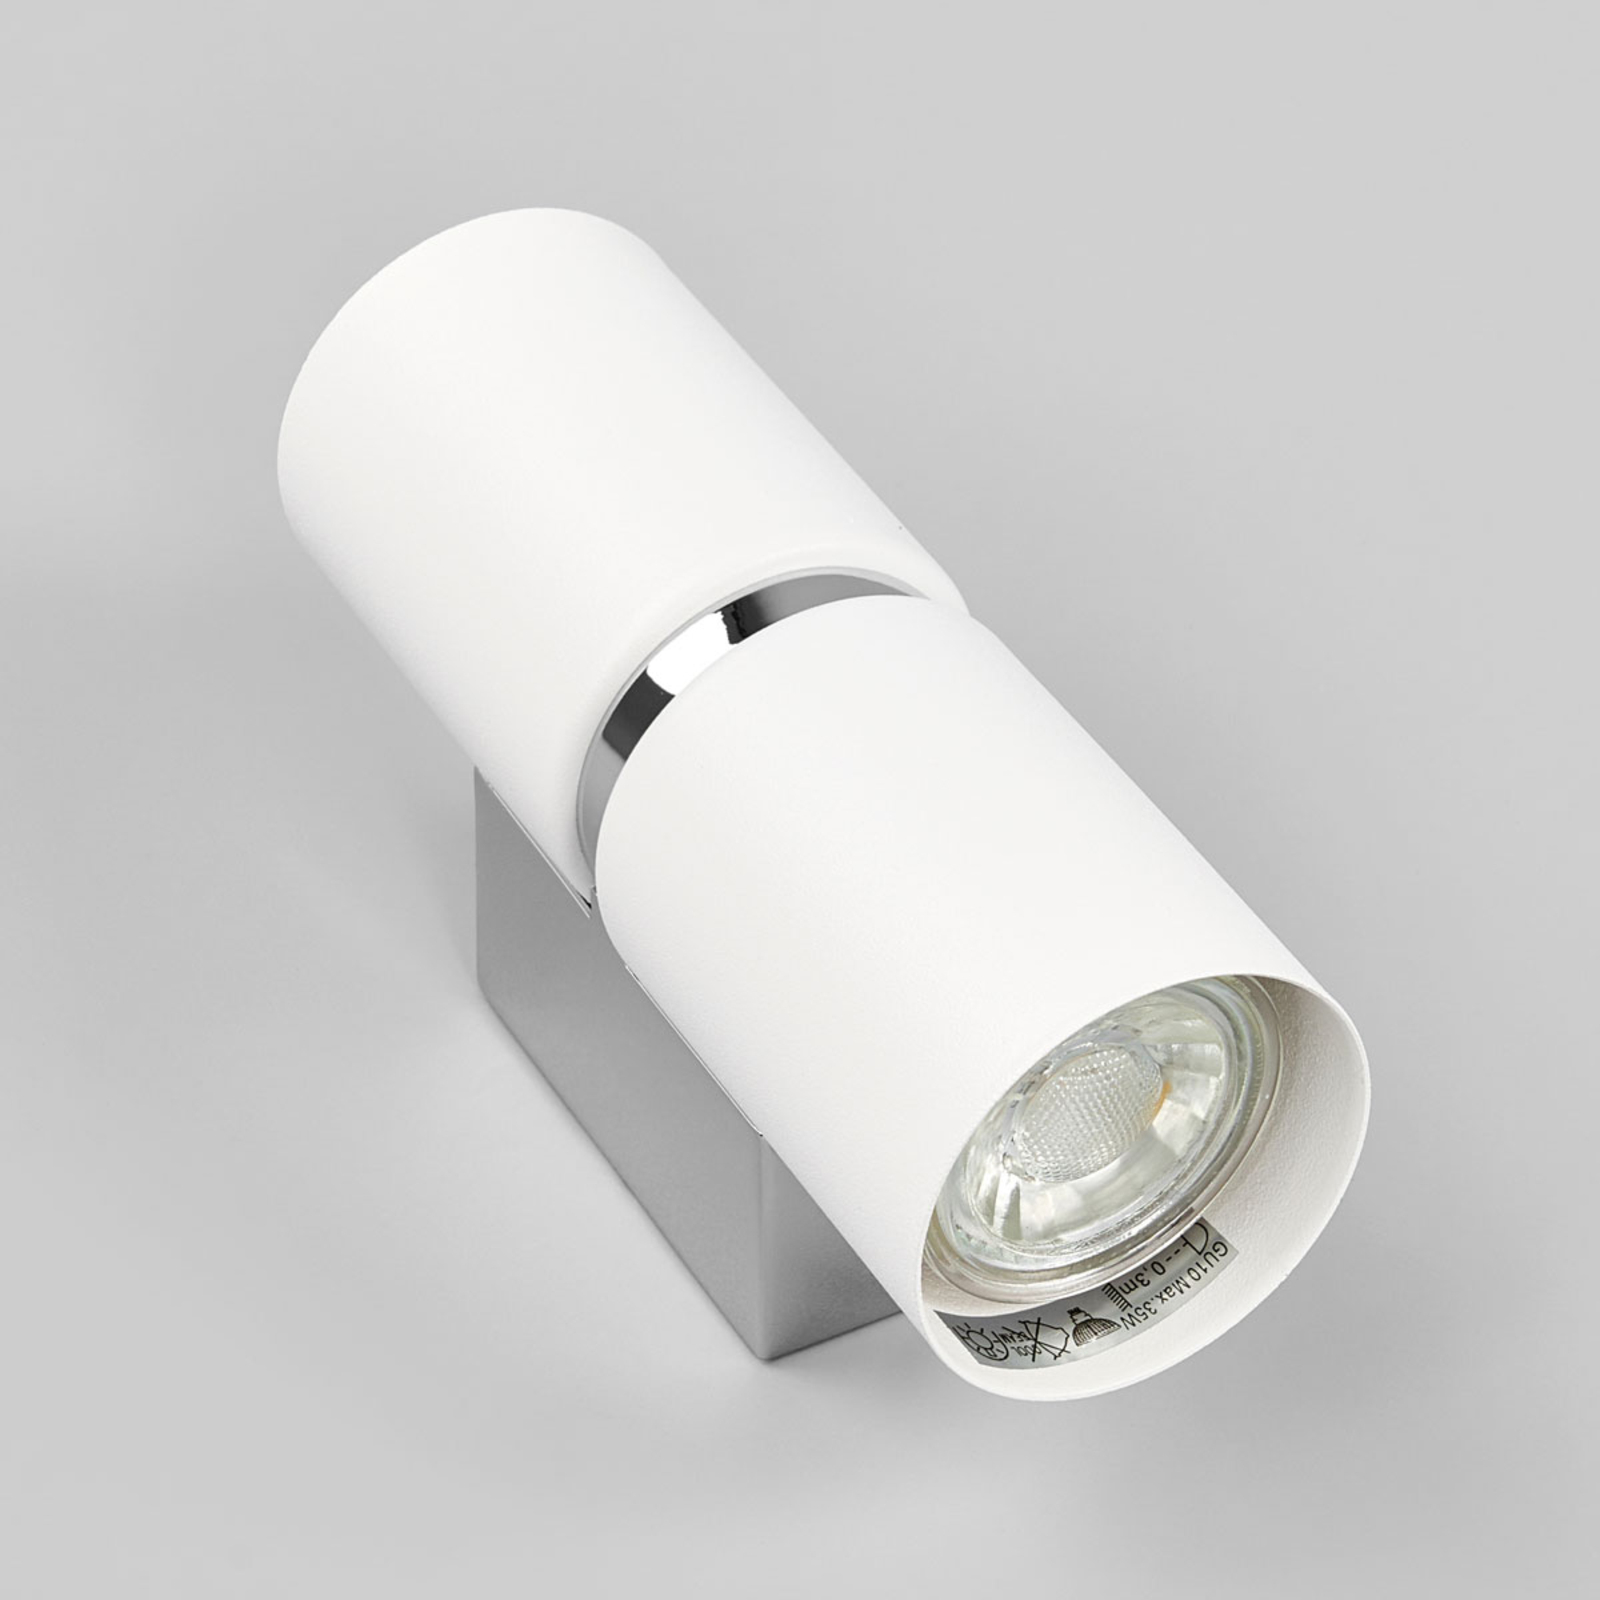 Passa LED-væglampe med 2 lyskilder, rund, hvid